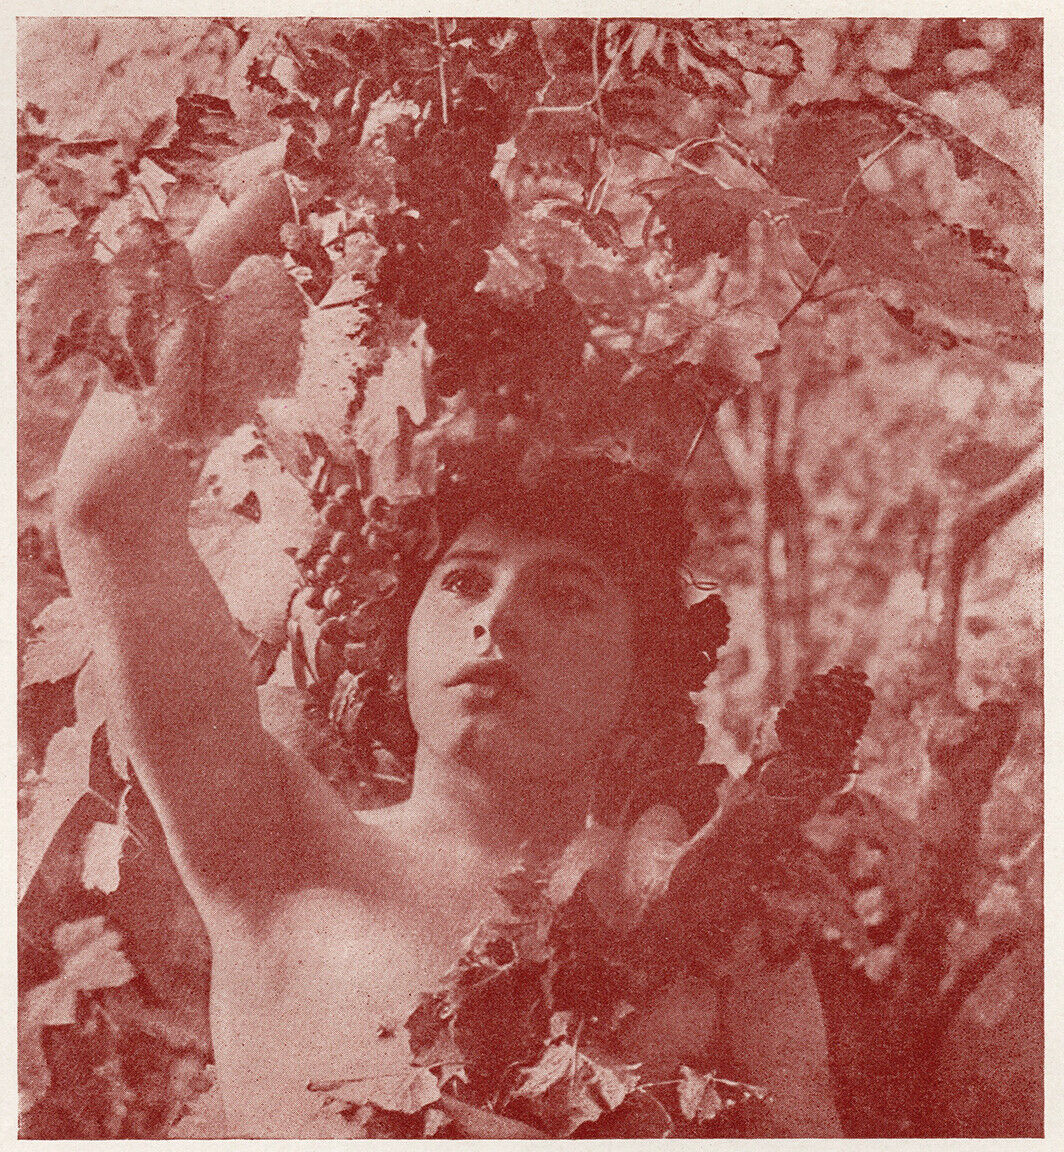 PAUL PICHIER, BACCHANTE, 1905Full Plate Halftone, Austrian Pictorialism